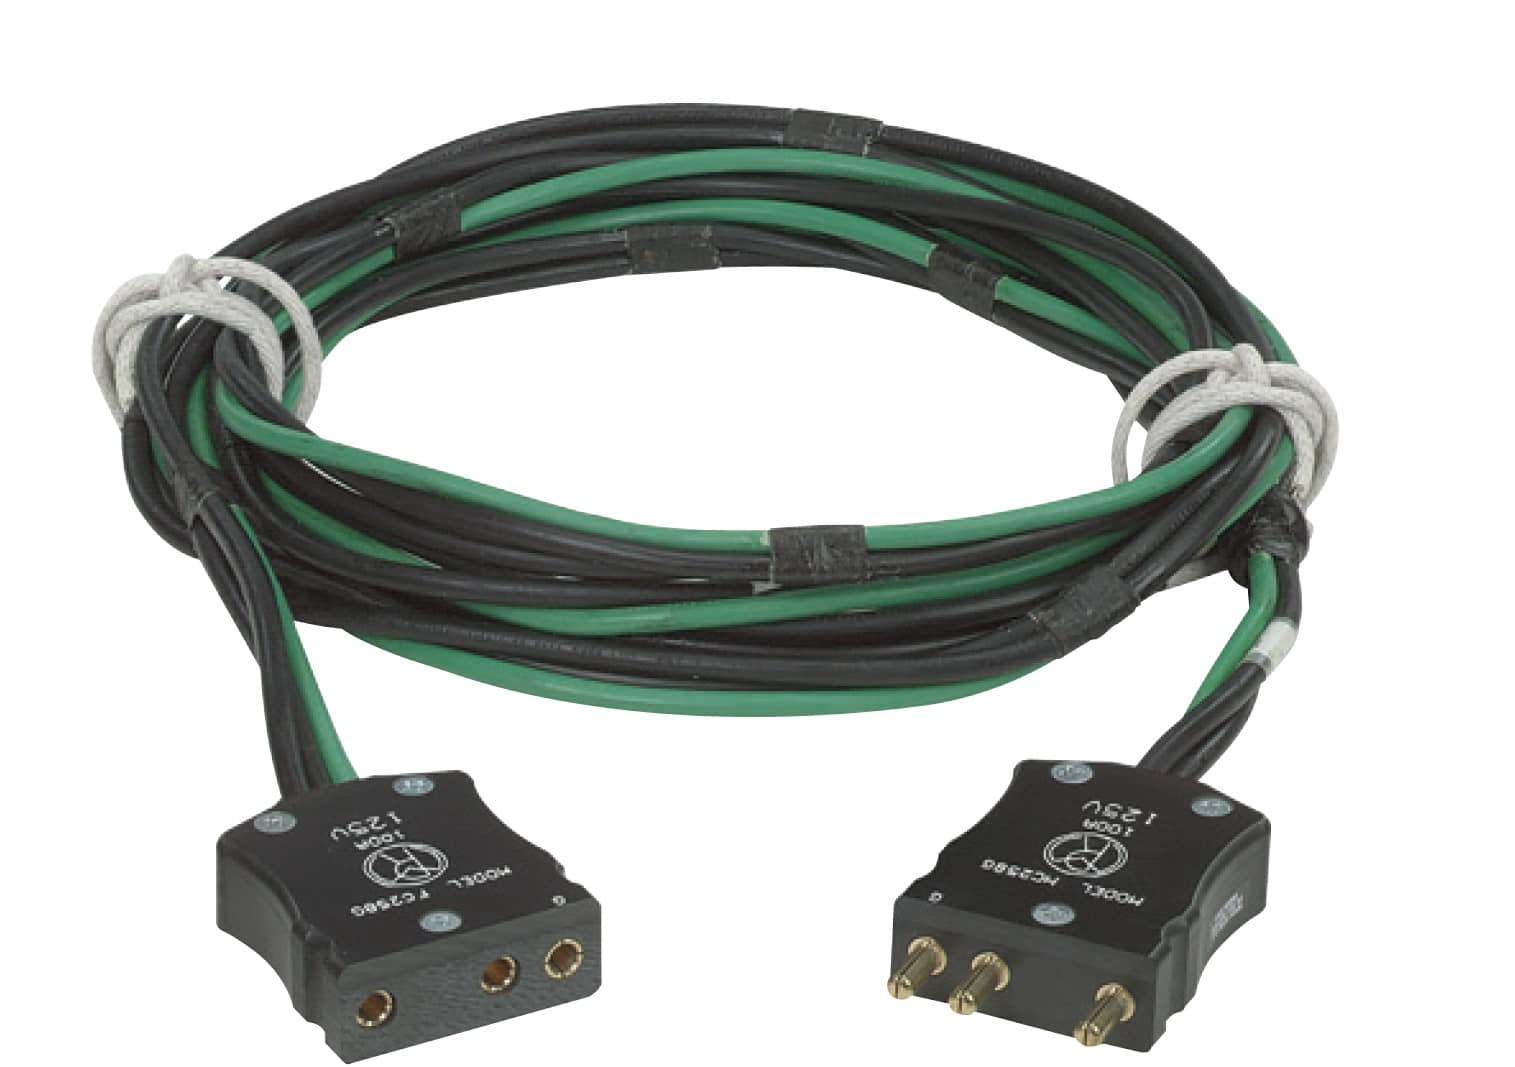 Bates 100 amp 120V 50' Cable